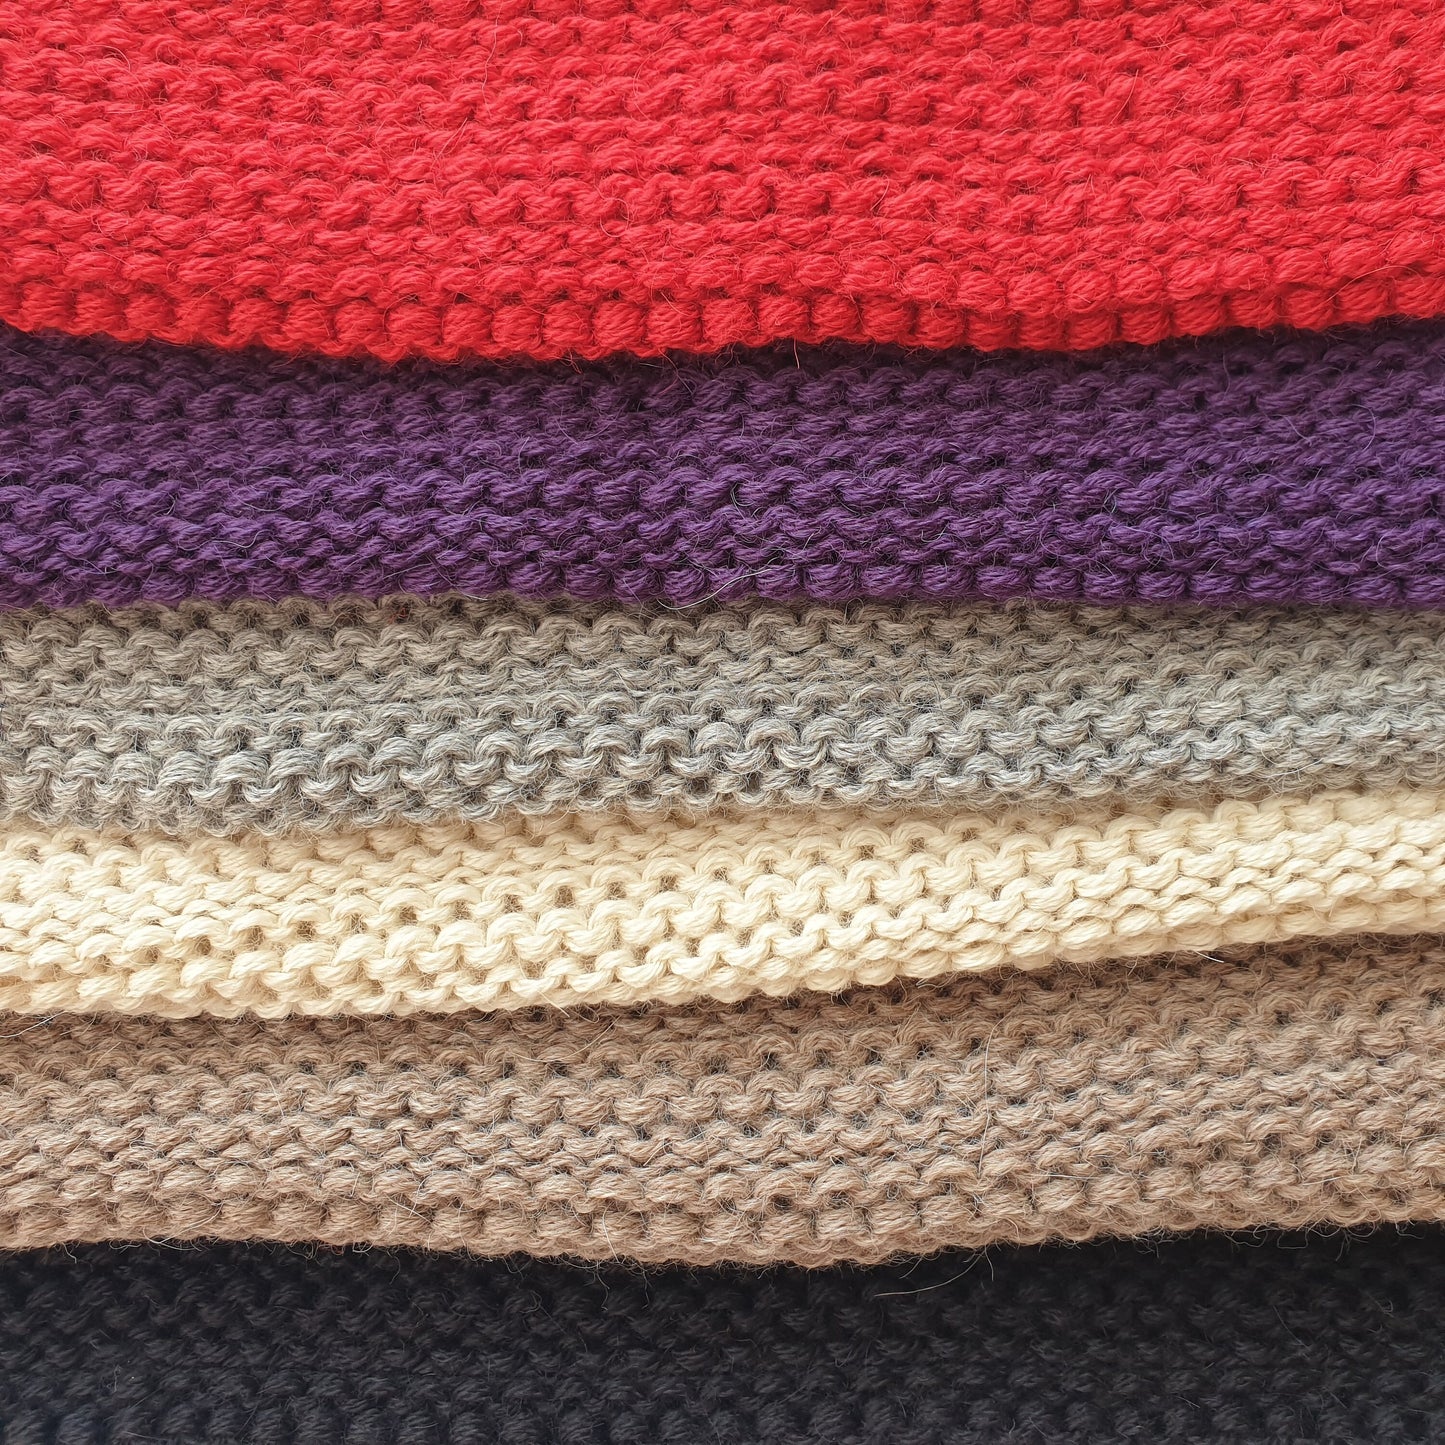 Alpaca knit snood, neckwarmer scarf, 100% baby alpaca, knitted circular mini snood. Fair trade, ethical, eco friendly, plastic free.